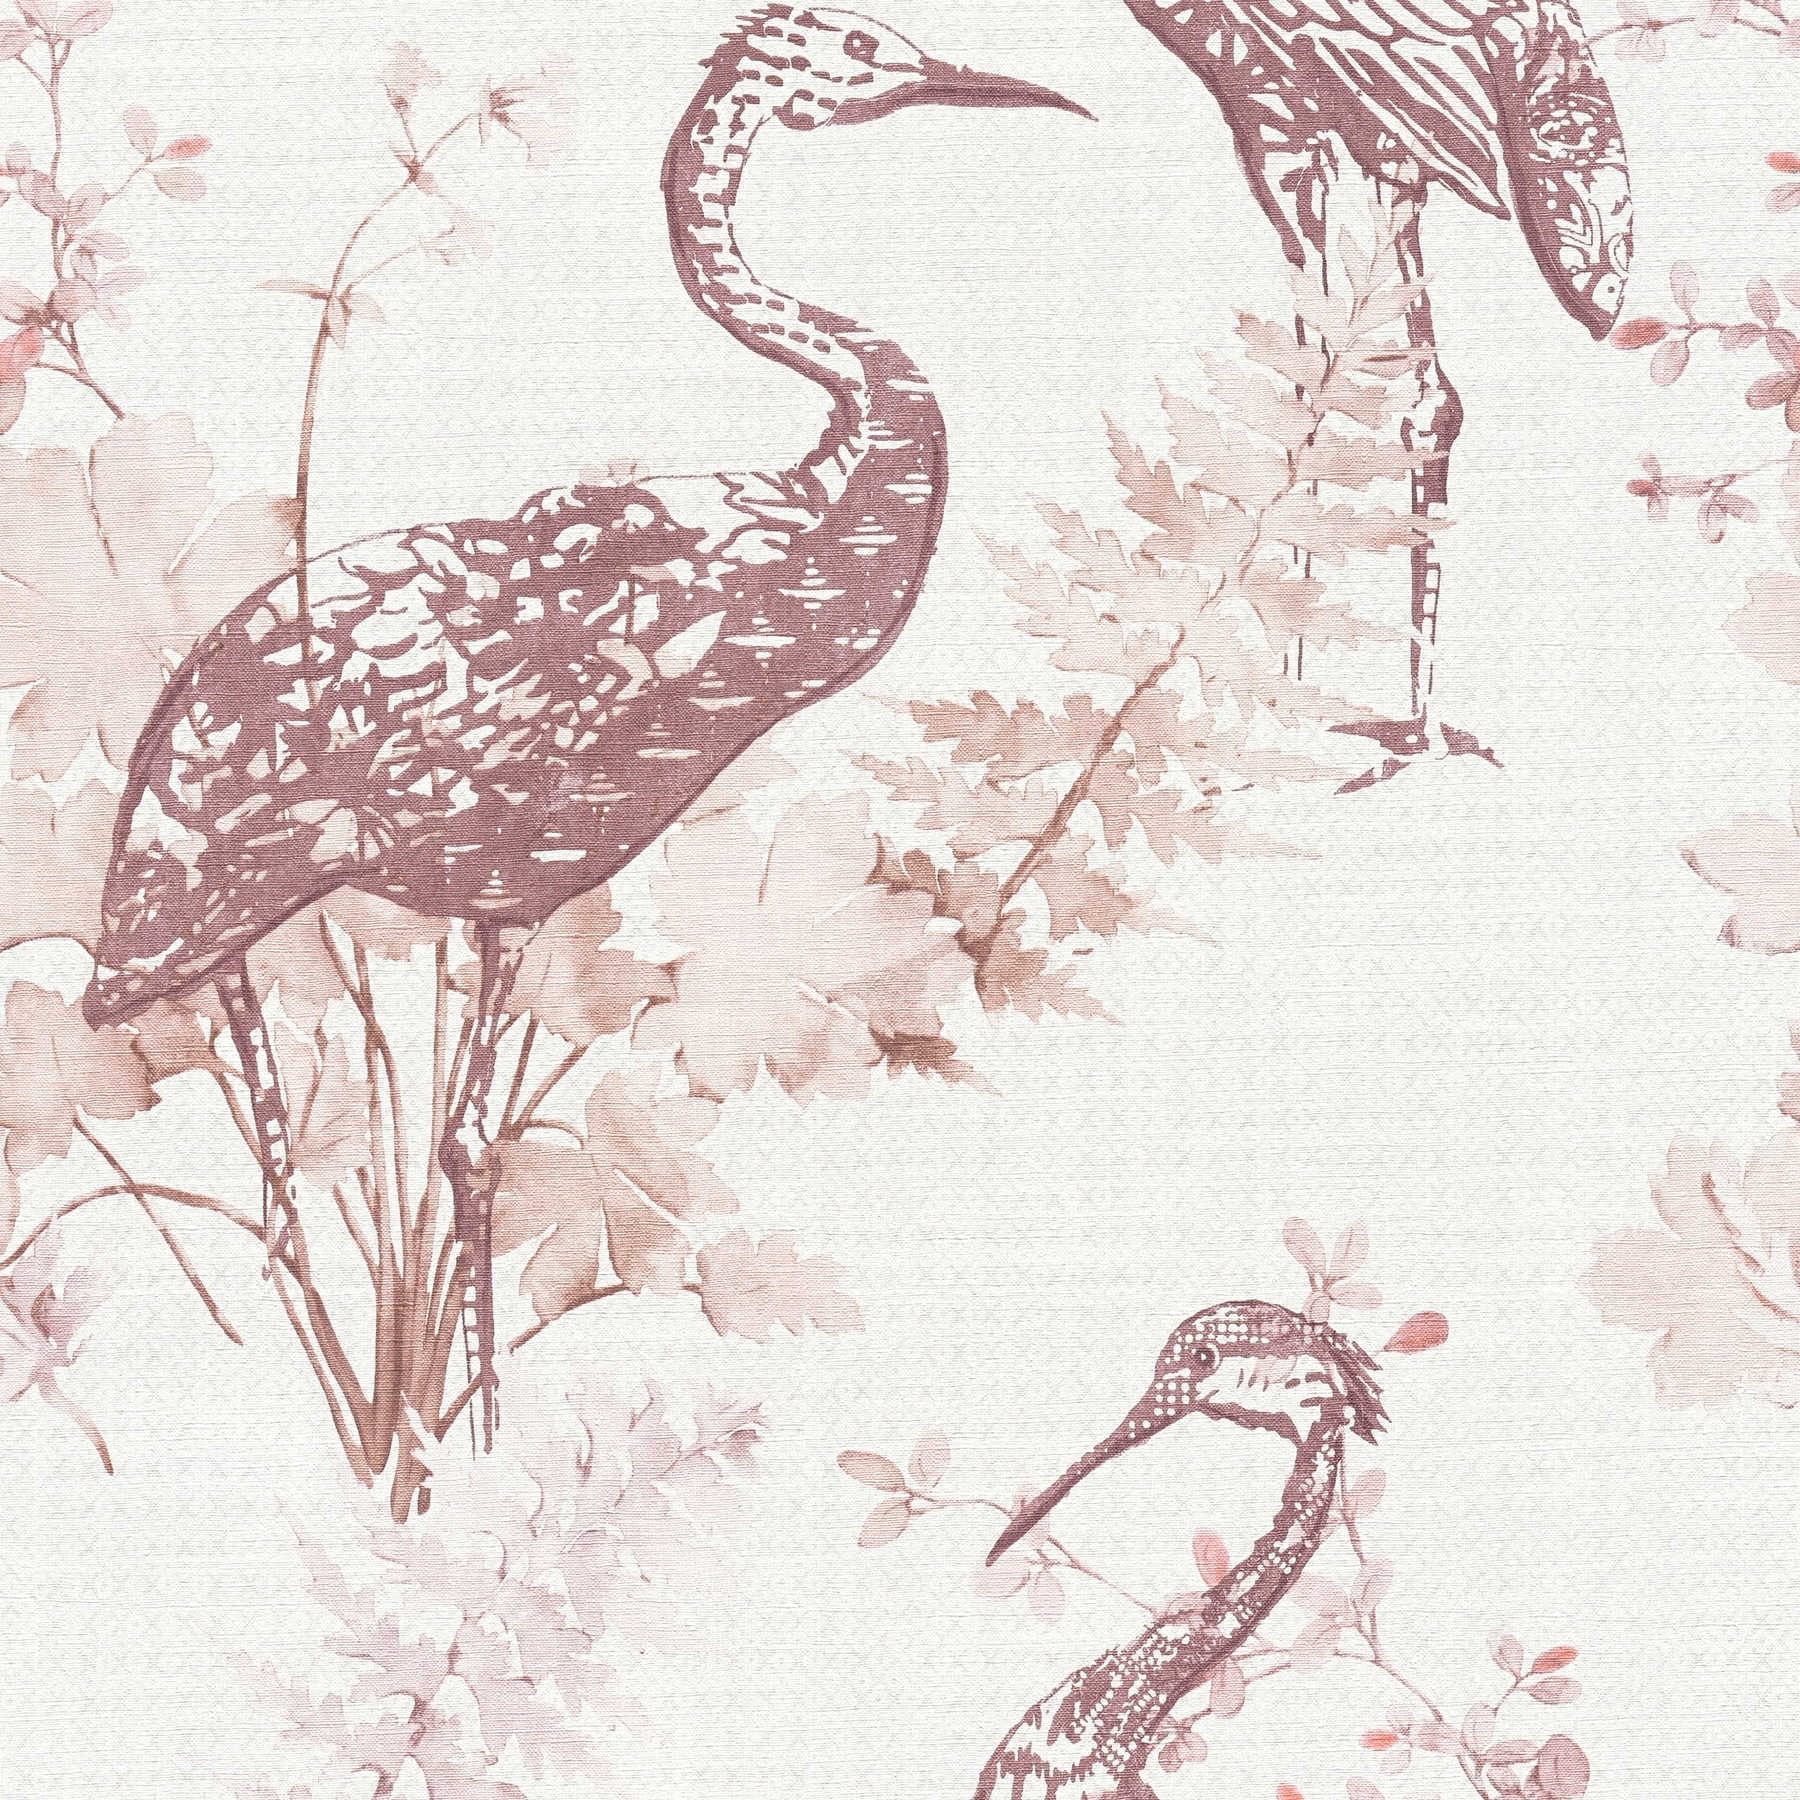         Tapete Natur Vögel & Blätter im Aquarell Stil – Beige, Rosa
    